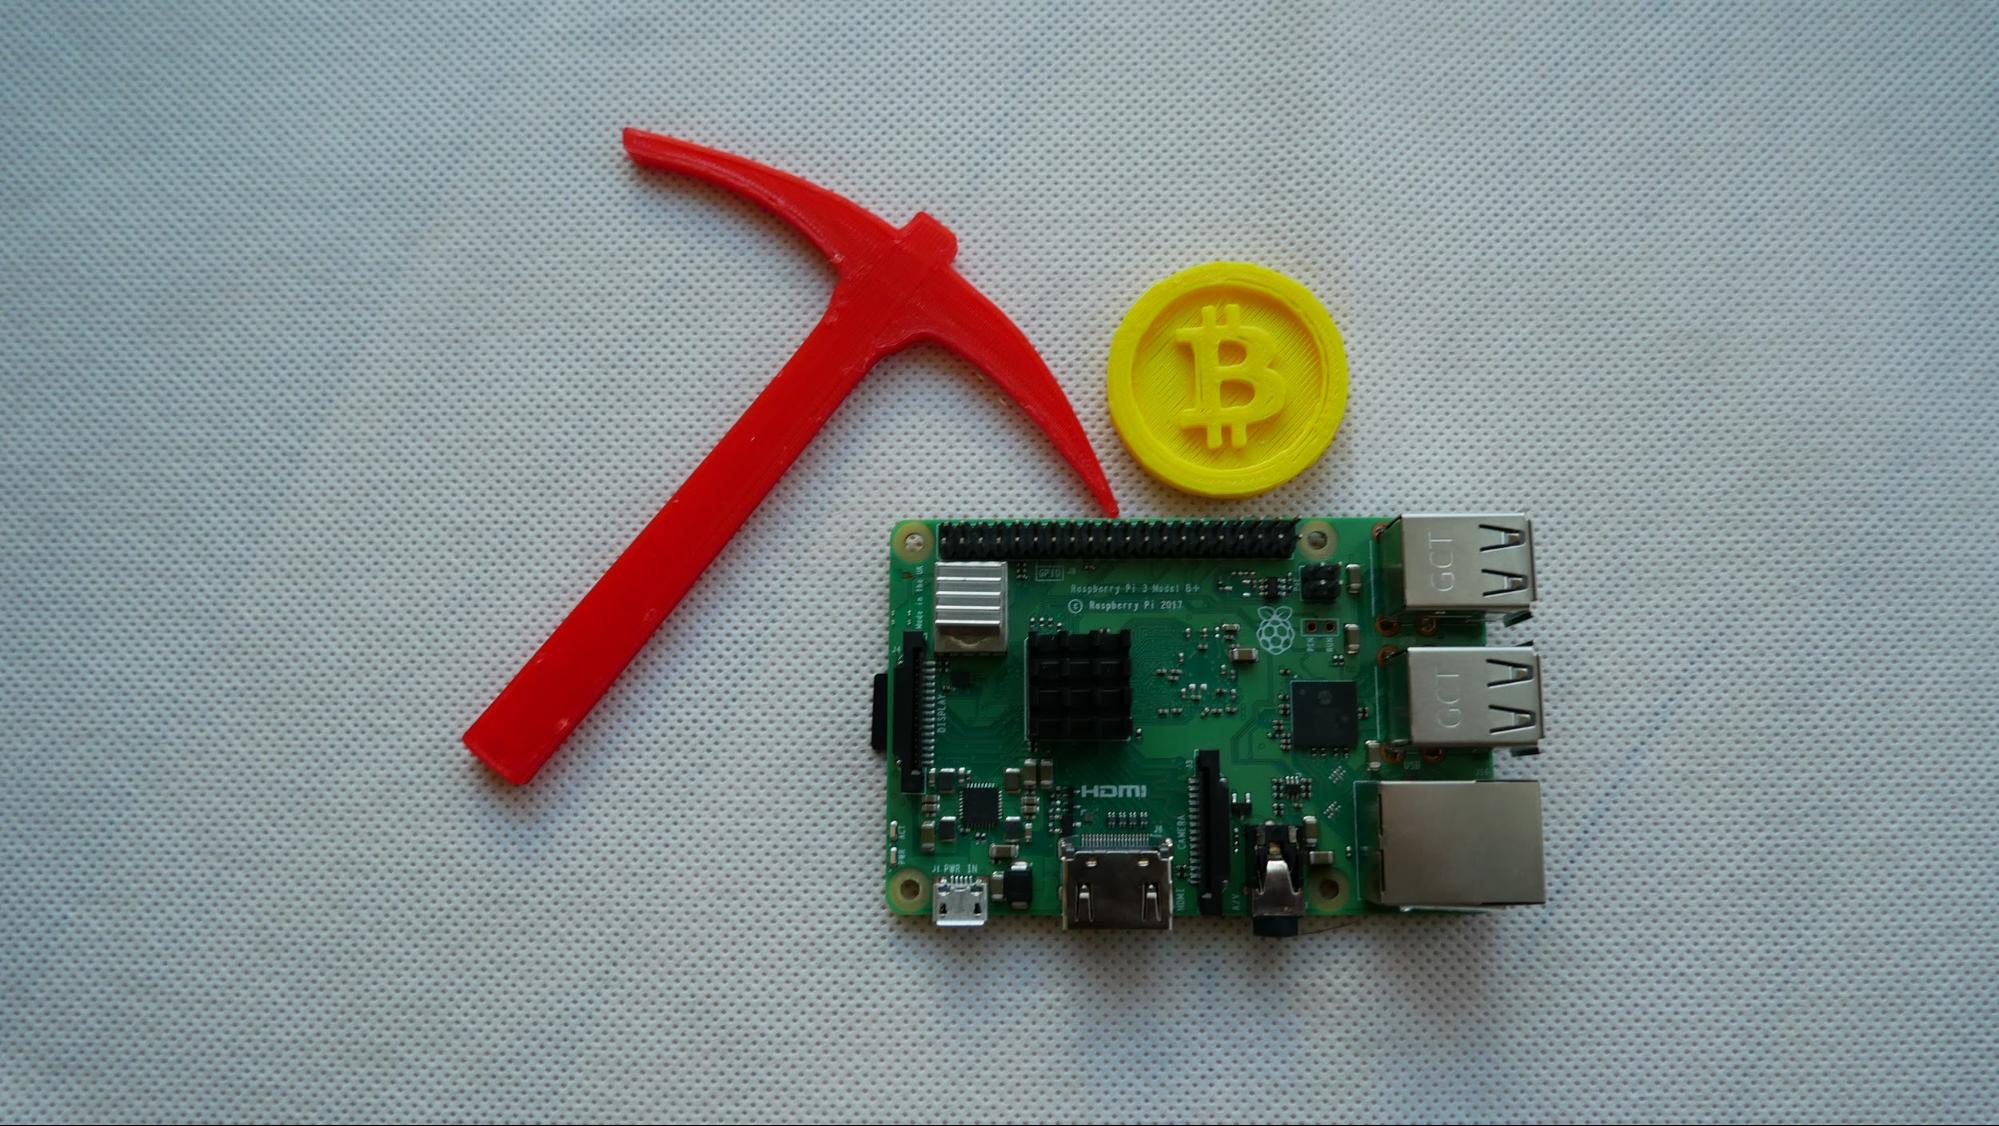 GitHub - csecrestjr/bitcoin-miner: Create a Raspberry Pi Bitcoin Miner